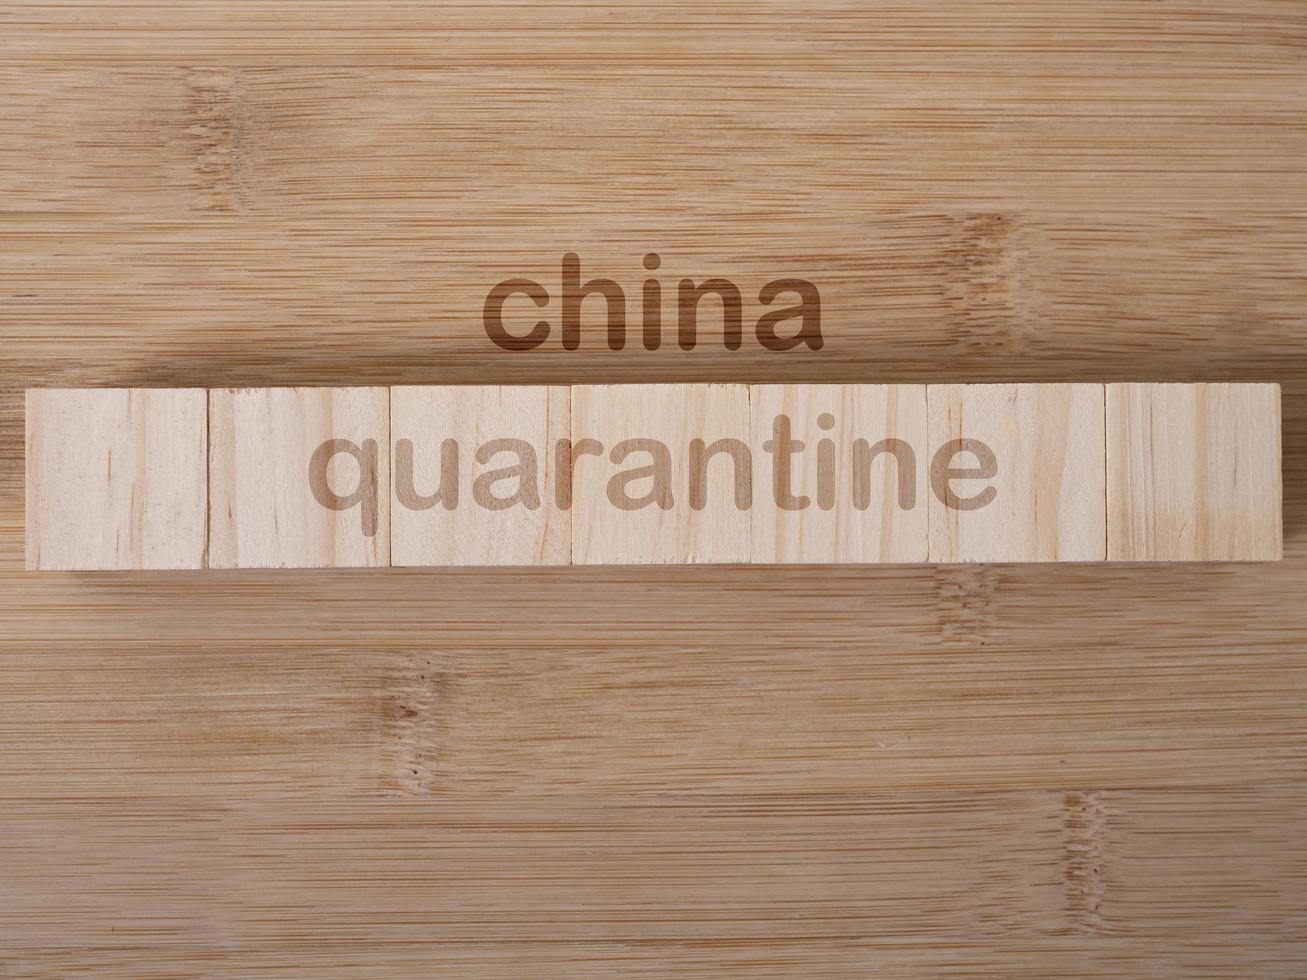 china quarantine word written on wood block. china quarantine text on wooden photo